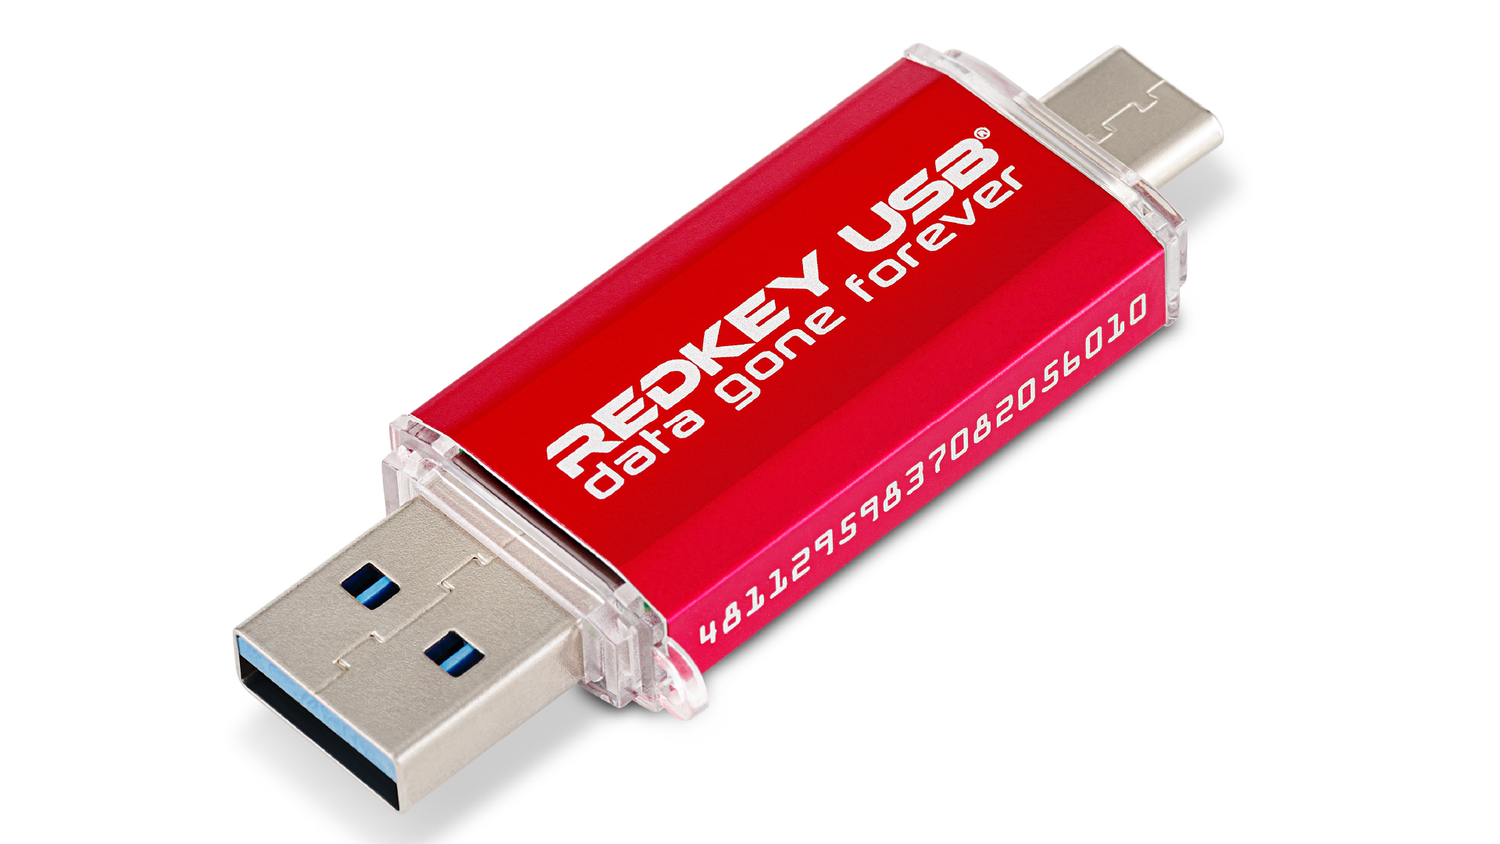 Redkey USB Makuake Campaign Device